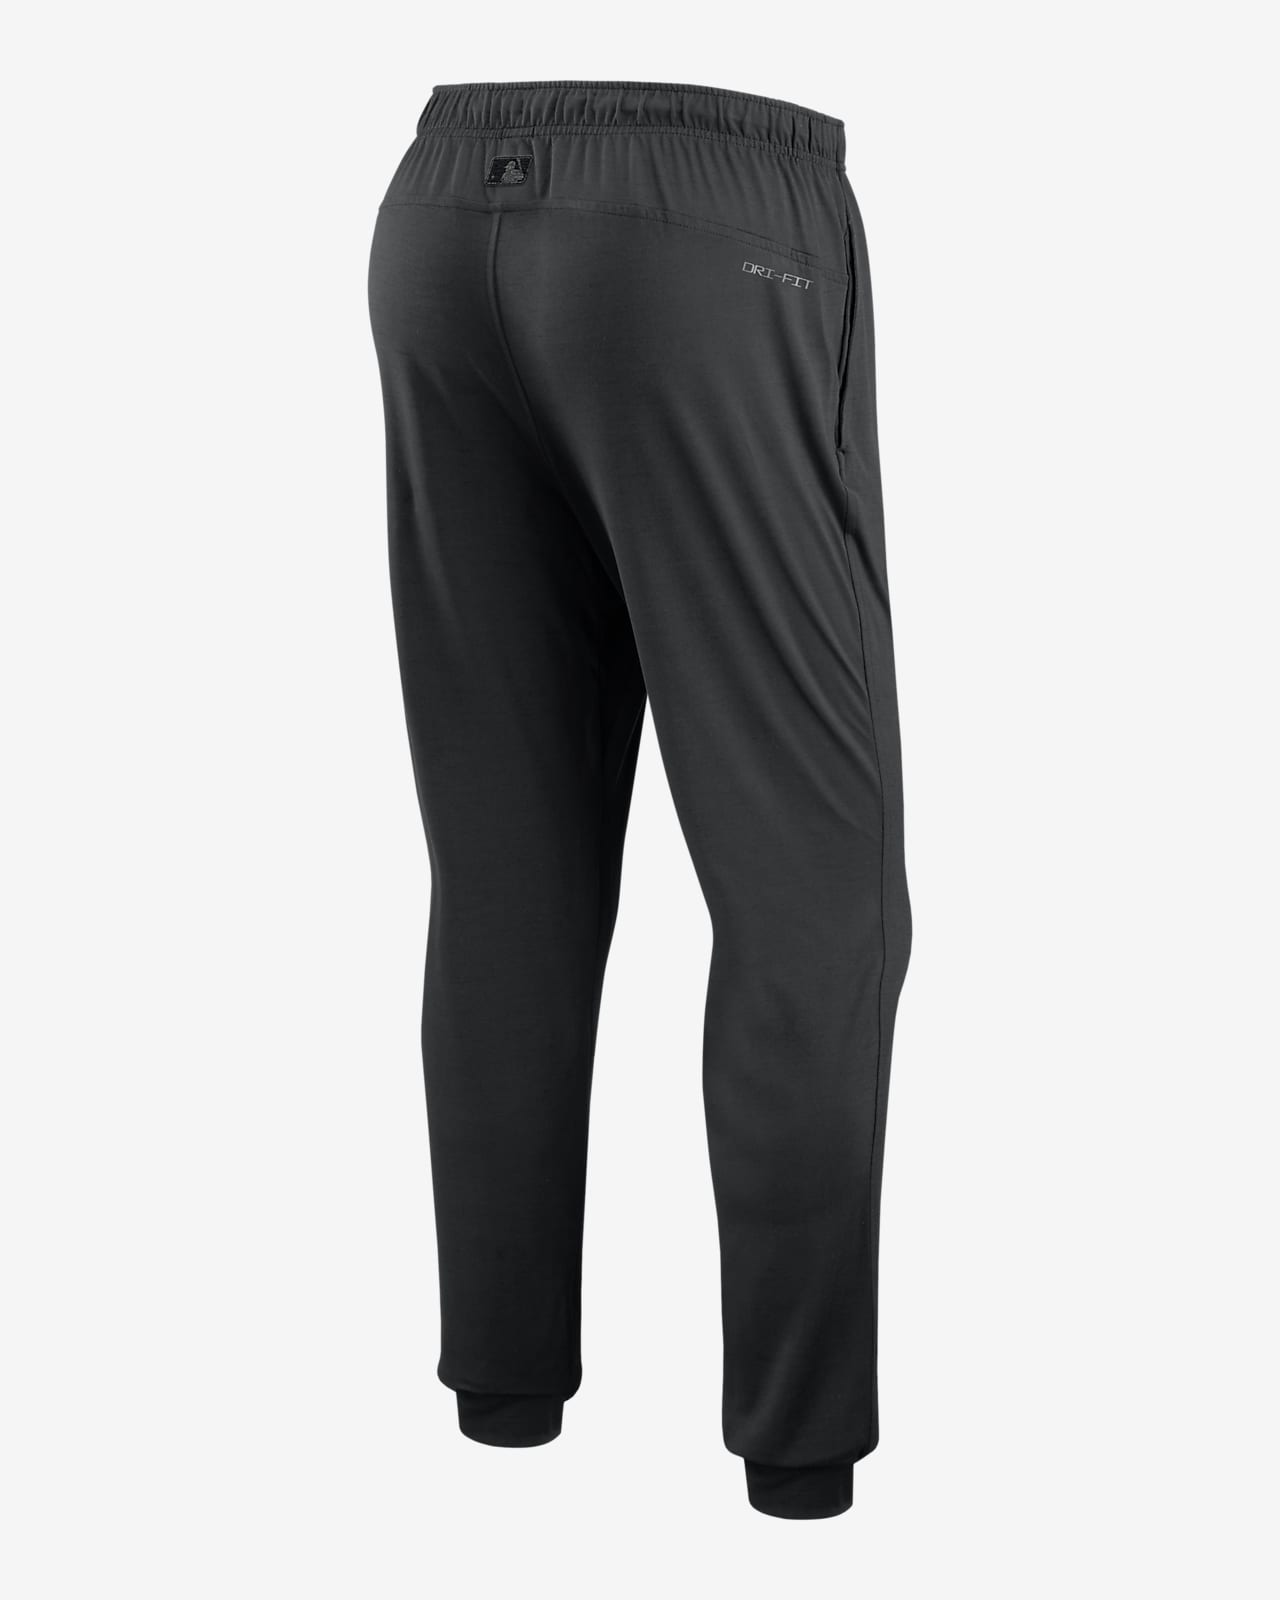 Nike Dri-FIT City Connect (MLB Kansas City Royals) Men's Shorts.